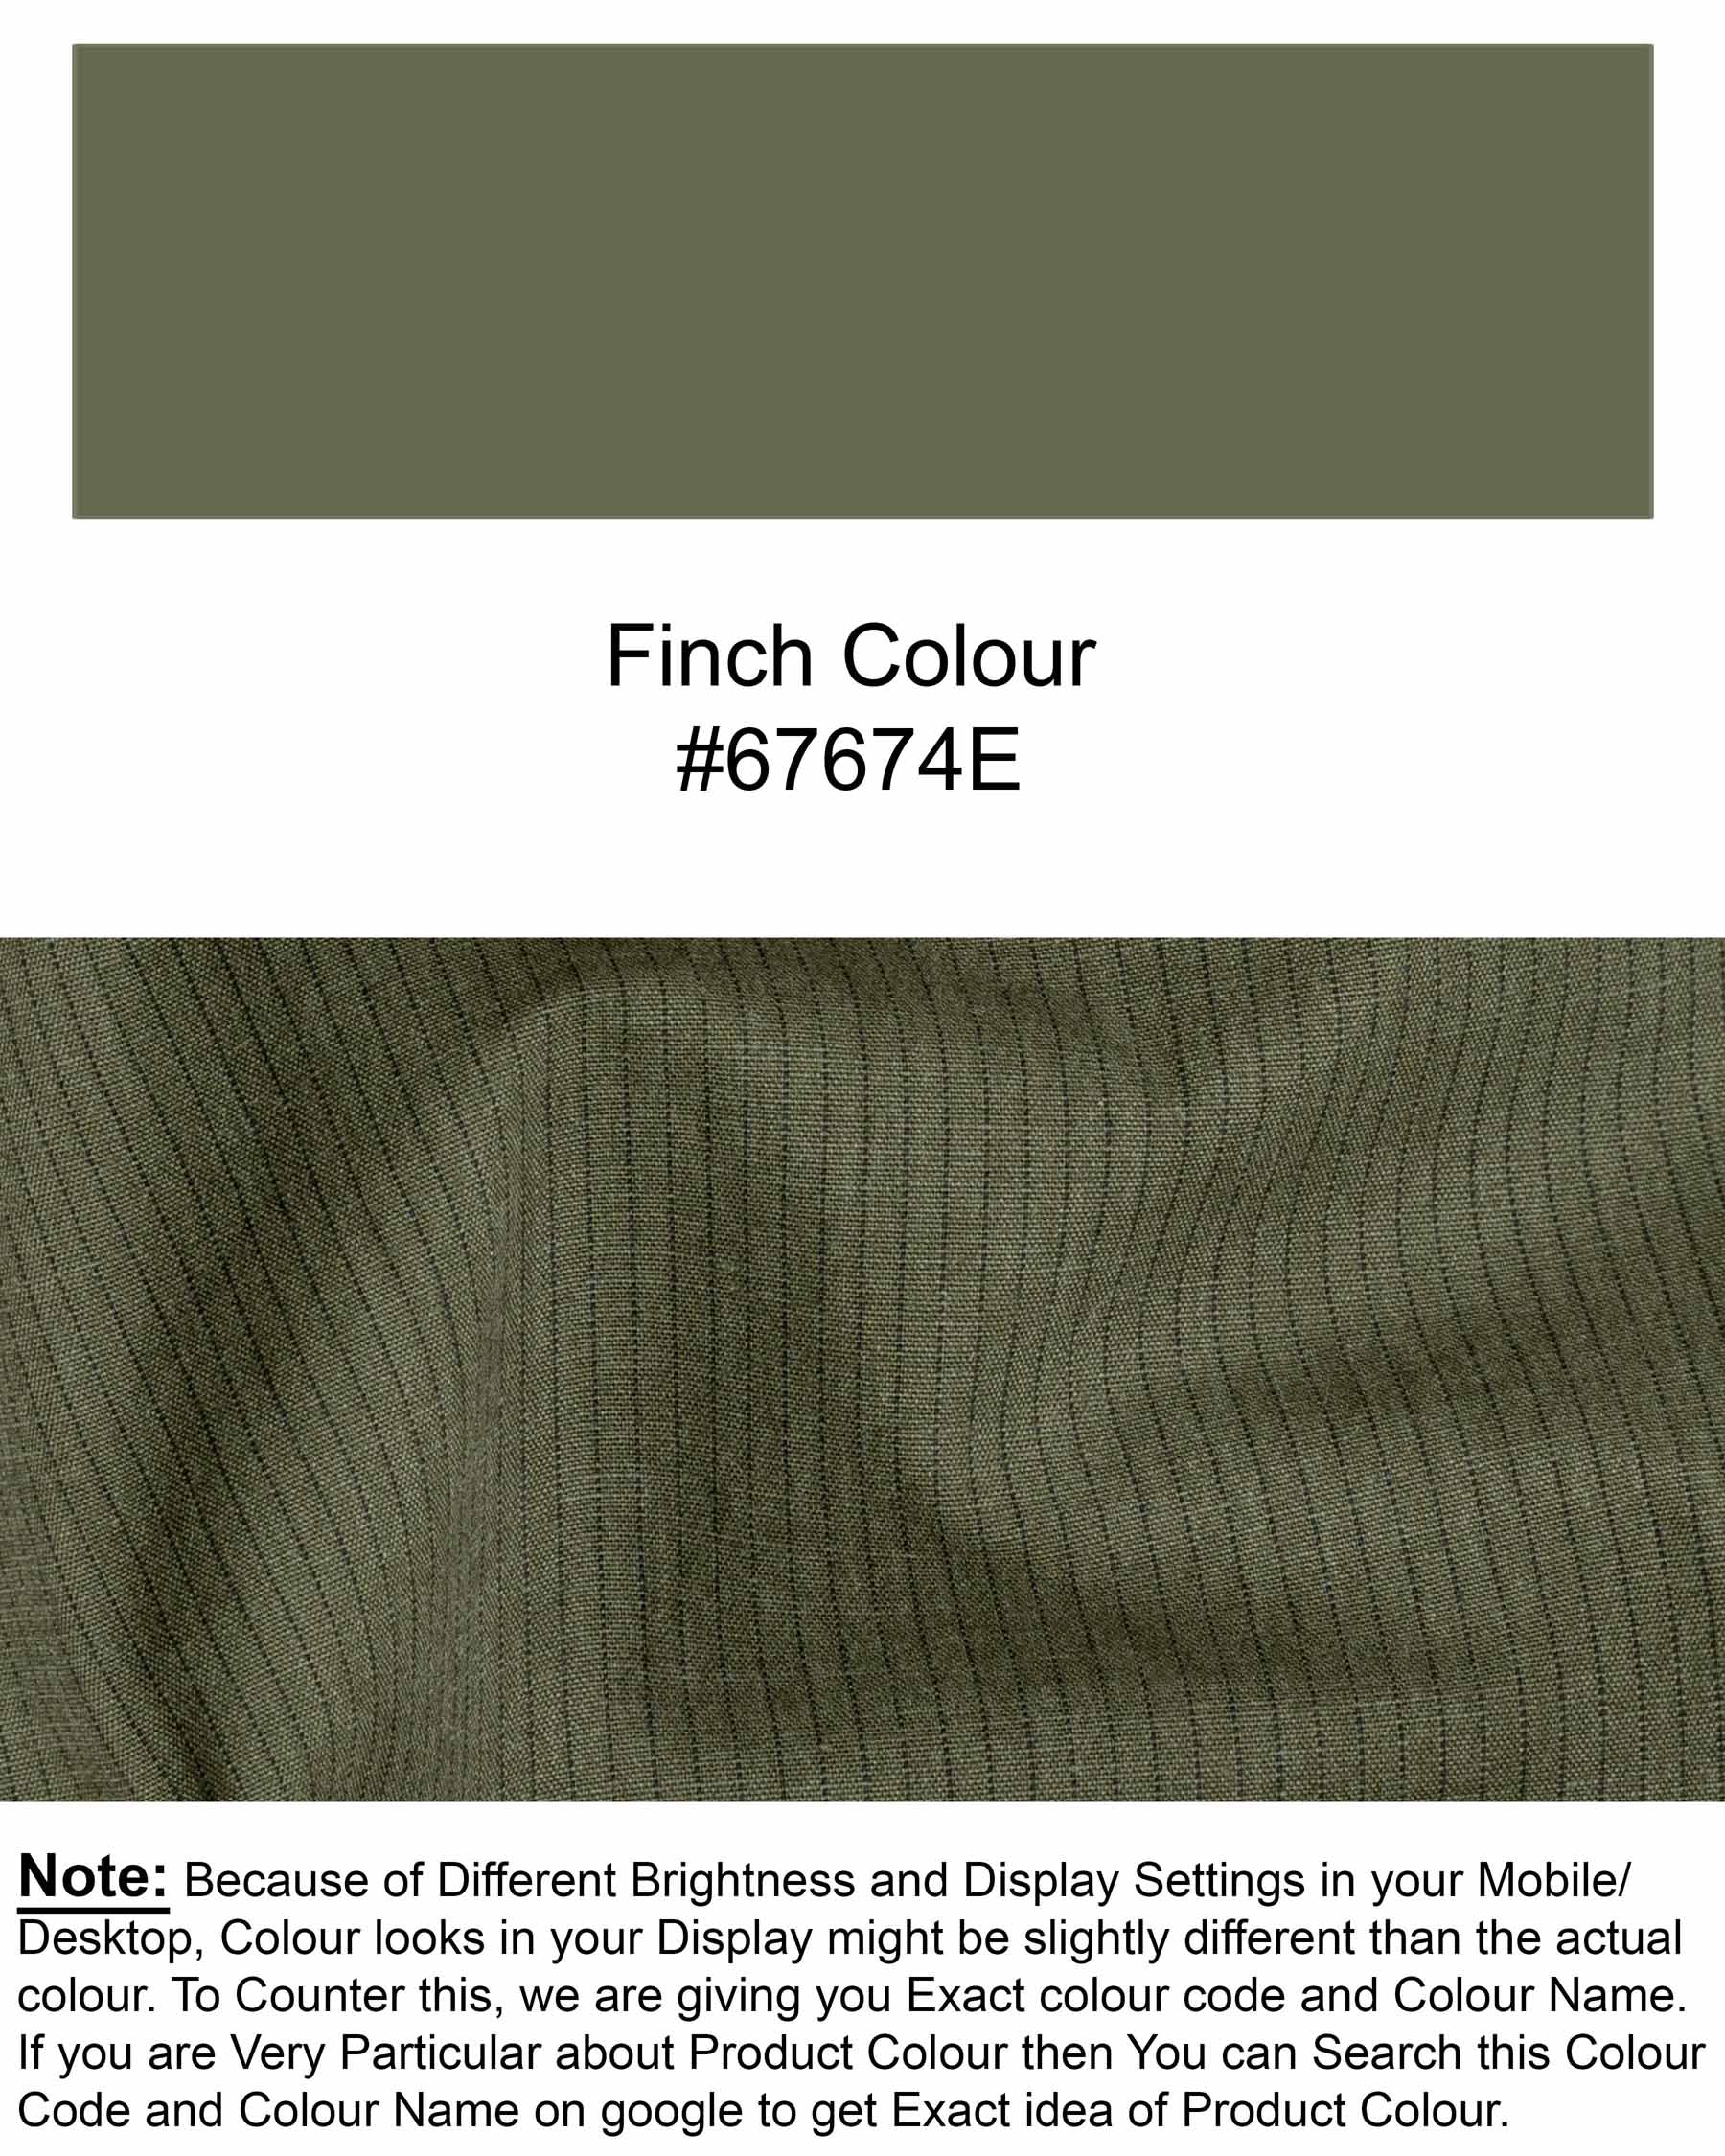 Finch Green Striped Royal Oxford OverShirt 6176-M-OS-38, 6176-M-OS-H-38, 6176-M-OS-39, 6176-M-OS-H-39, 6176-M-OS-40, 6176-M-OS-H-40, 6176-M-OS-42, 6176-M-OS-H-42, 6176-M-OS-44, 6176-M-OS-H-44, 6176-M-OS-46, 6176-M-OS-H-46, 6176-M-OS-48, 6176-M-OS-H-48, 6176-M-OS-50, 6176-M-OS-H-50, 6176-M-OS-52, 6176-M-OS-H-52